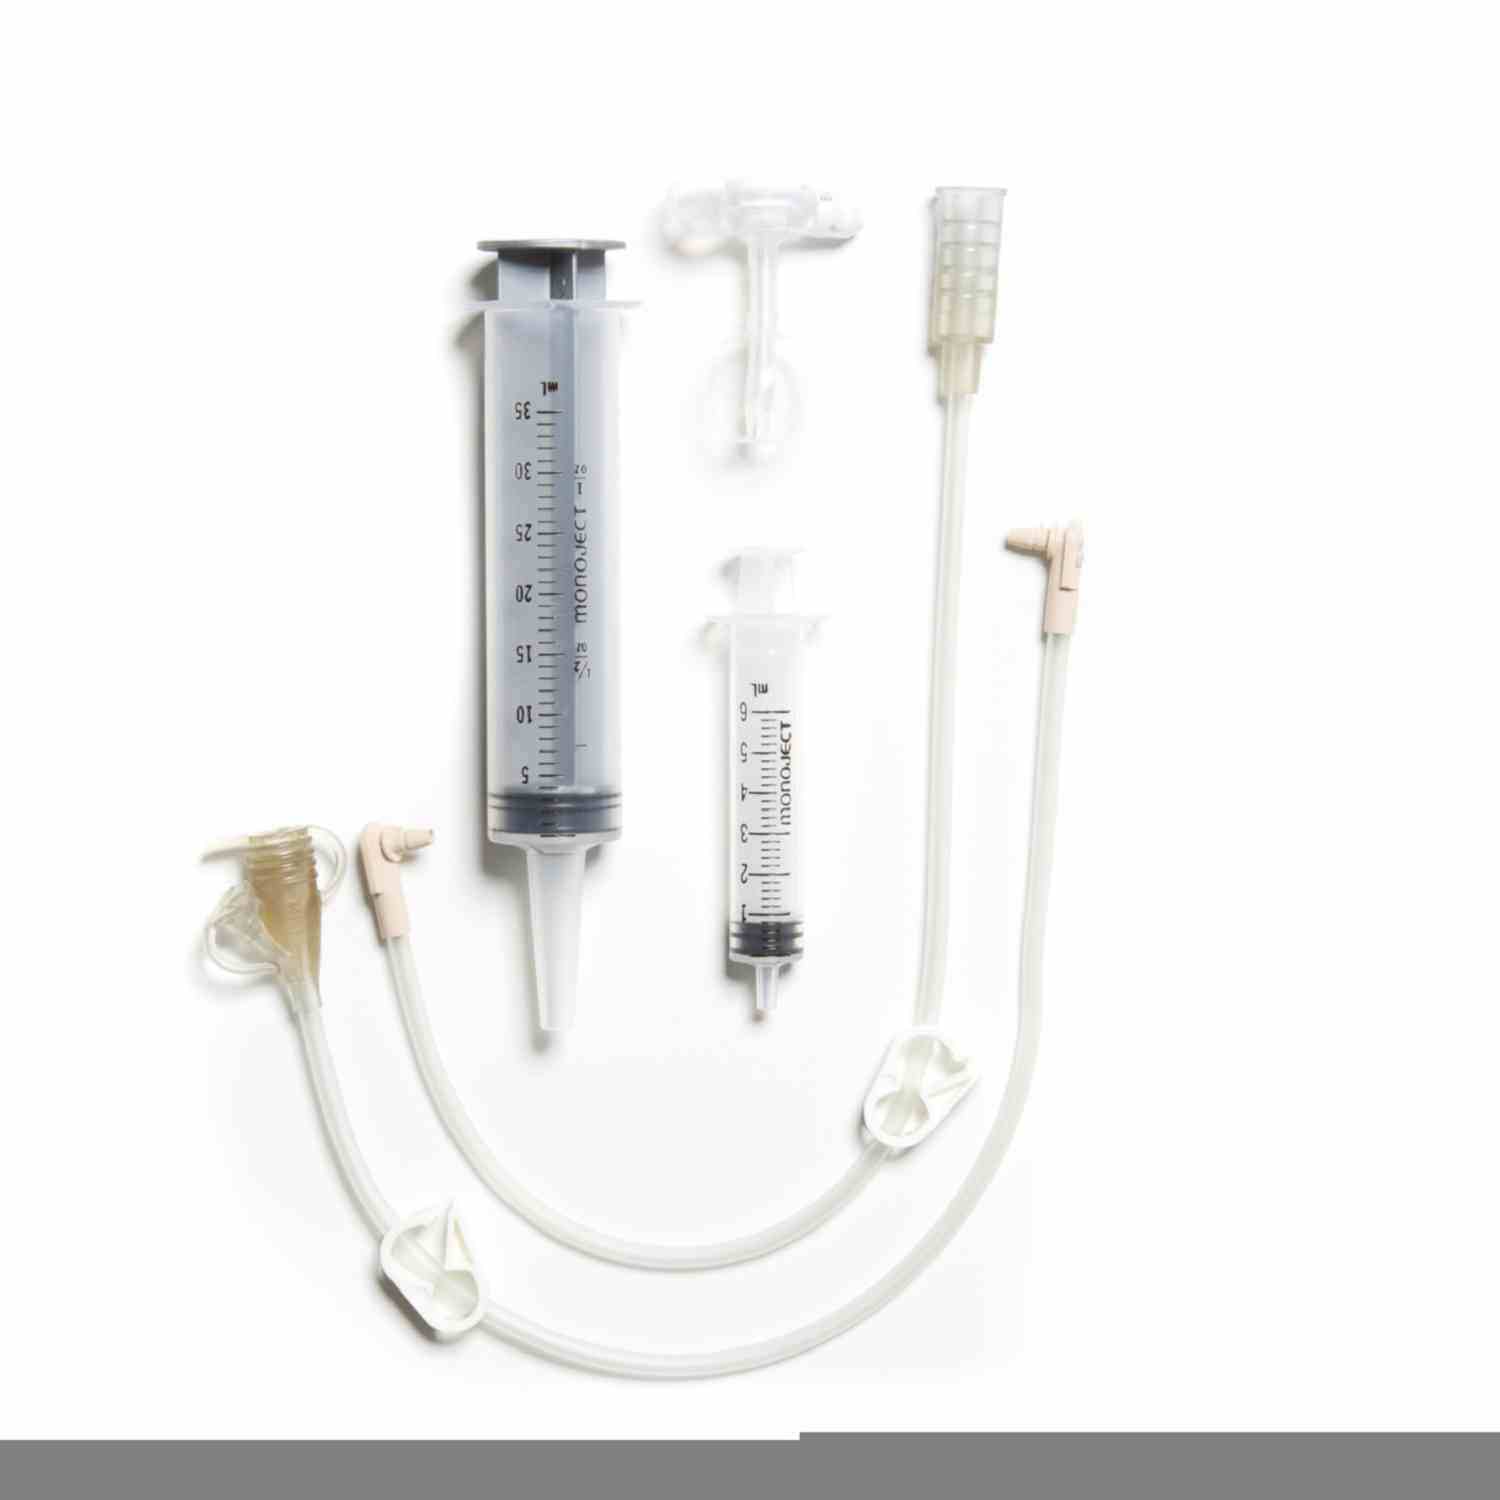 MIC-KEY Low-Profile Gastrostomy Feeding Tube Kit, 14 Fr., 2.0 cm Tube, 0120-14-2-0, 1 Each